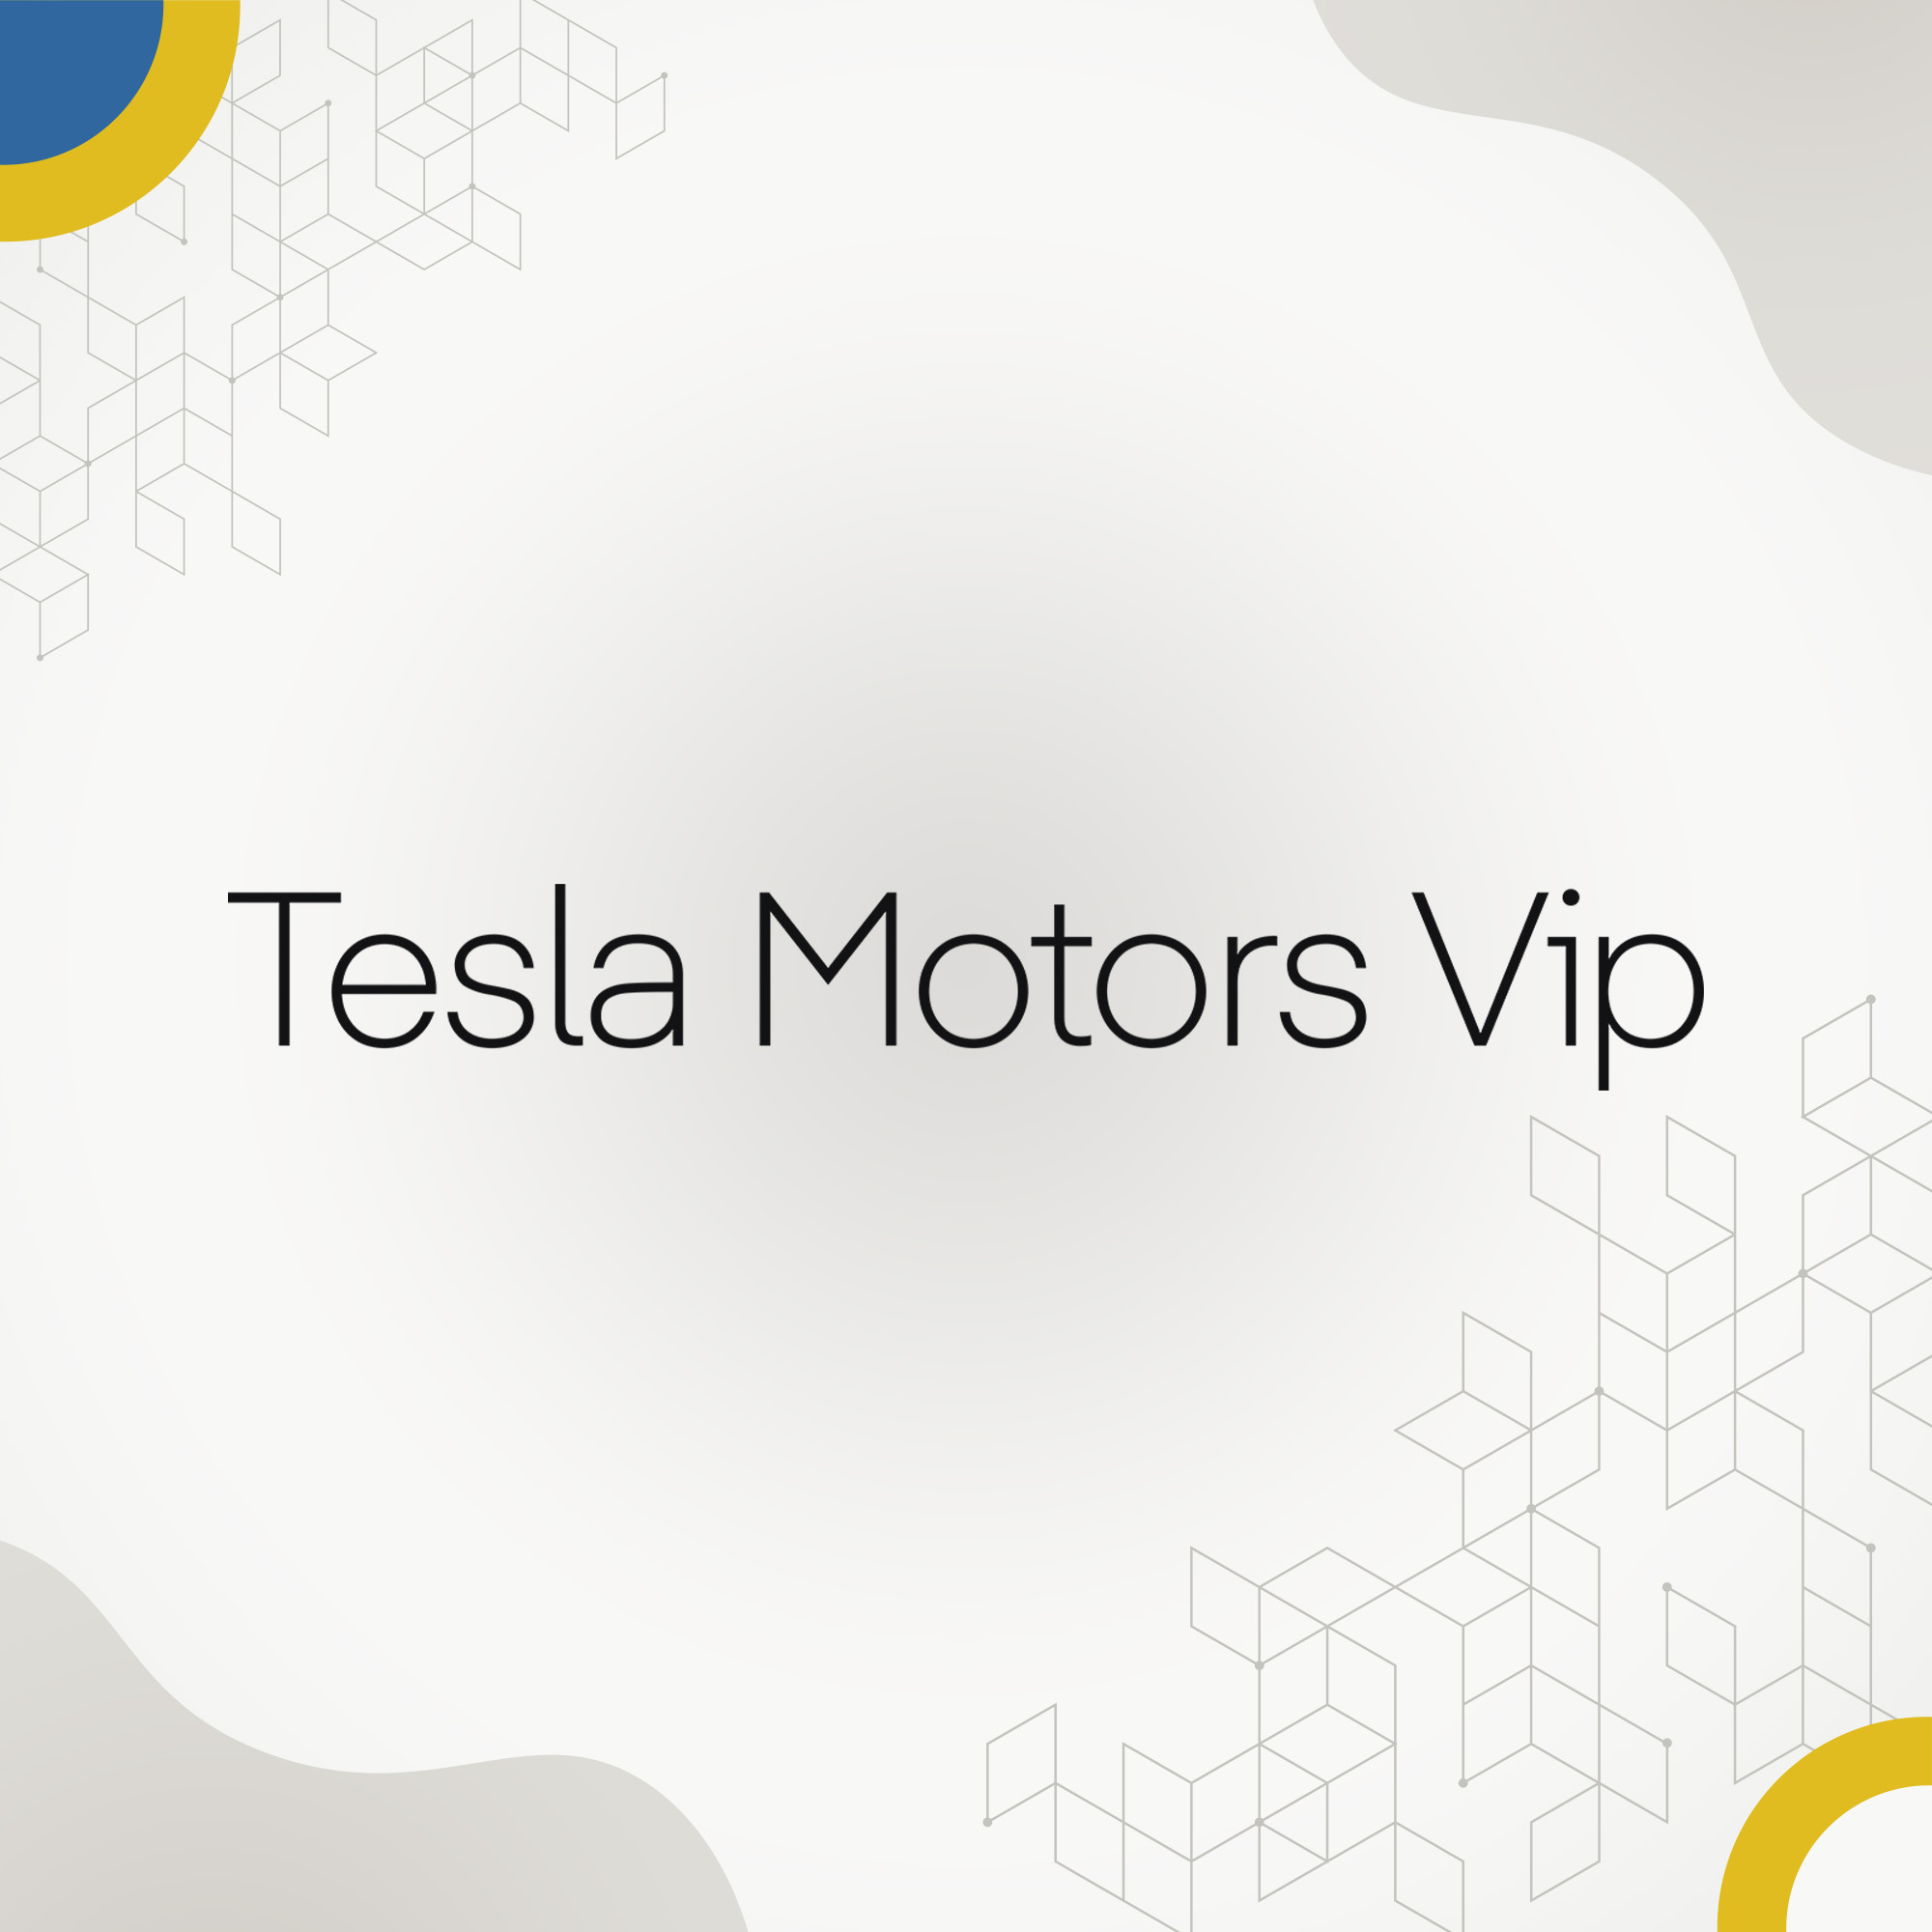 Tesla Motors VIP